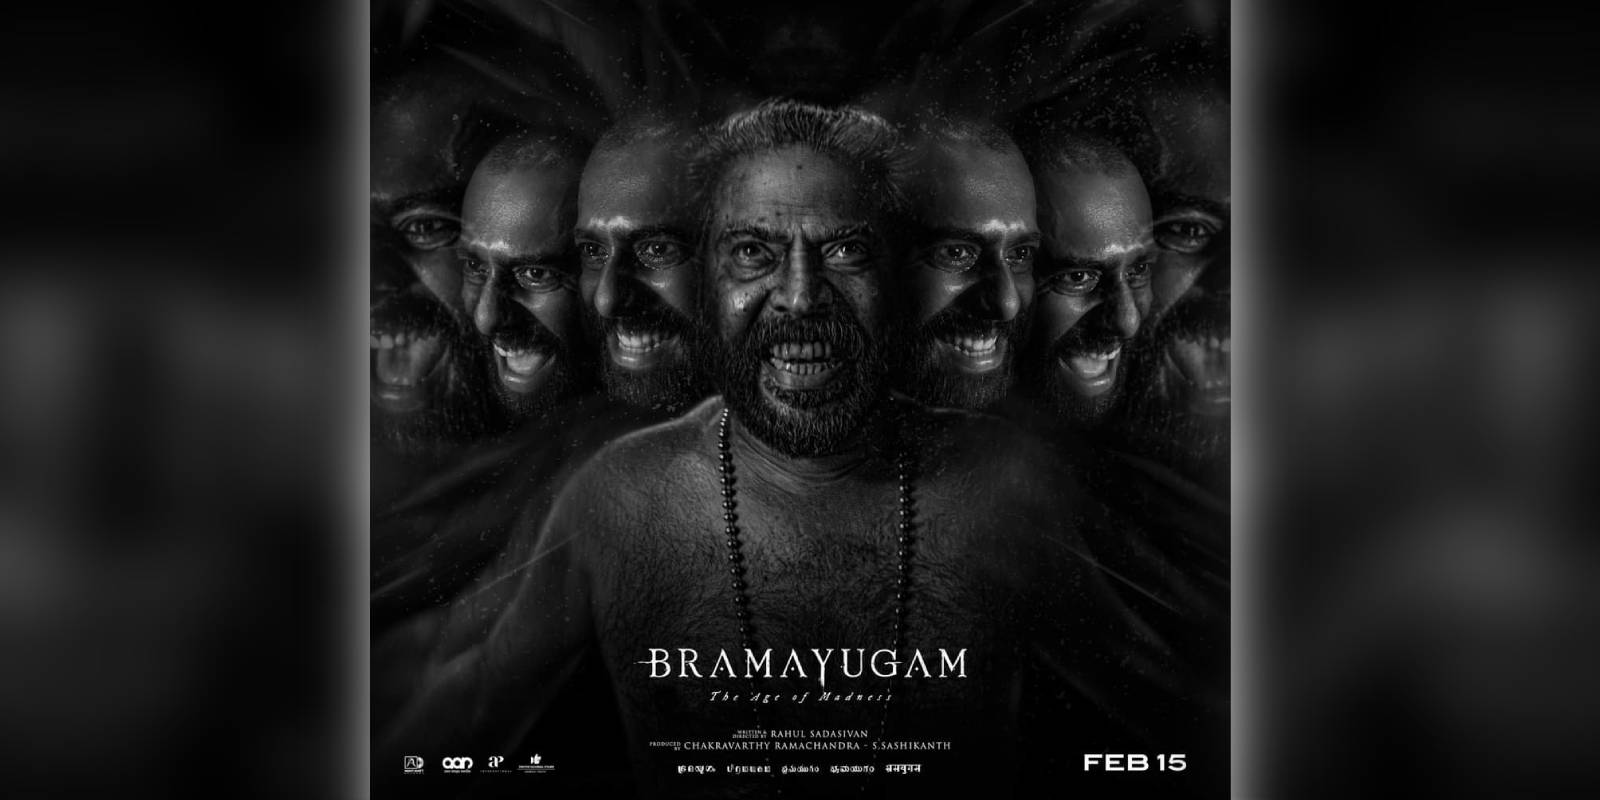 Rahu Sadasivan's directorial Bramayugam